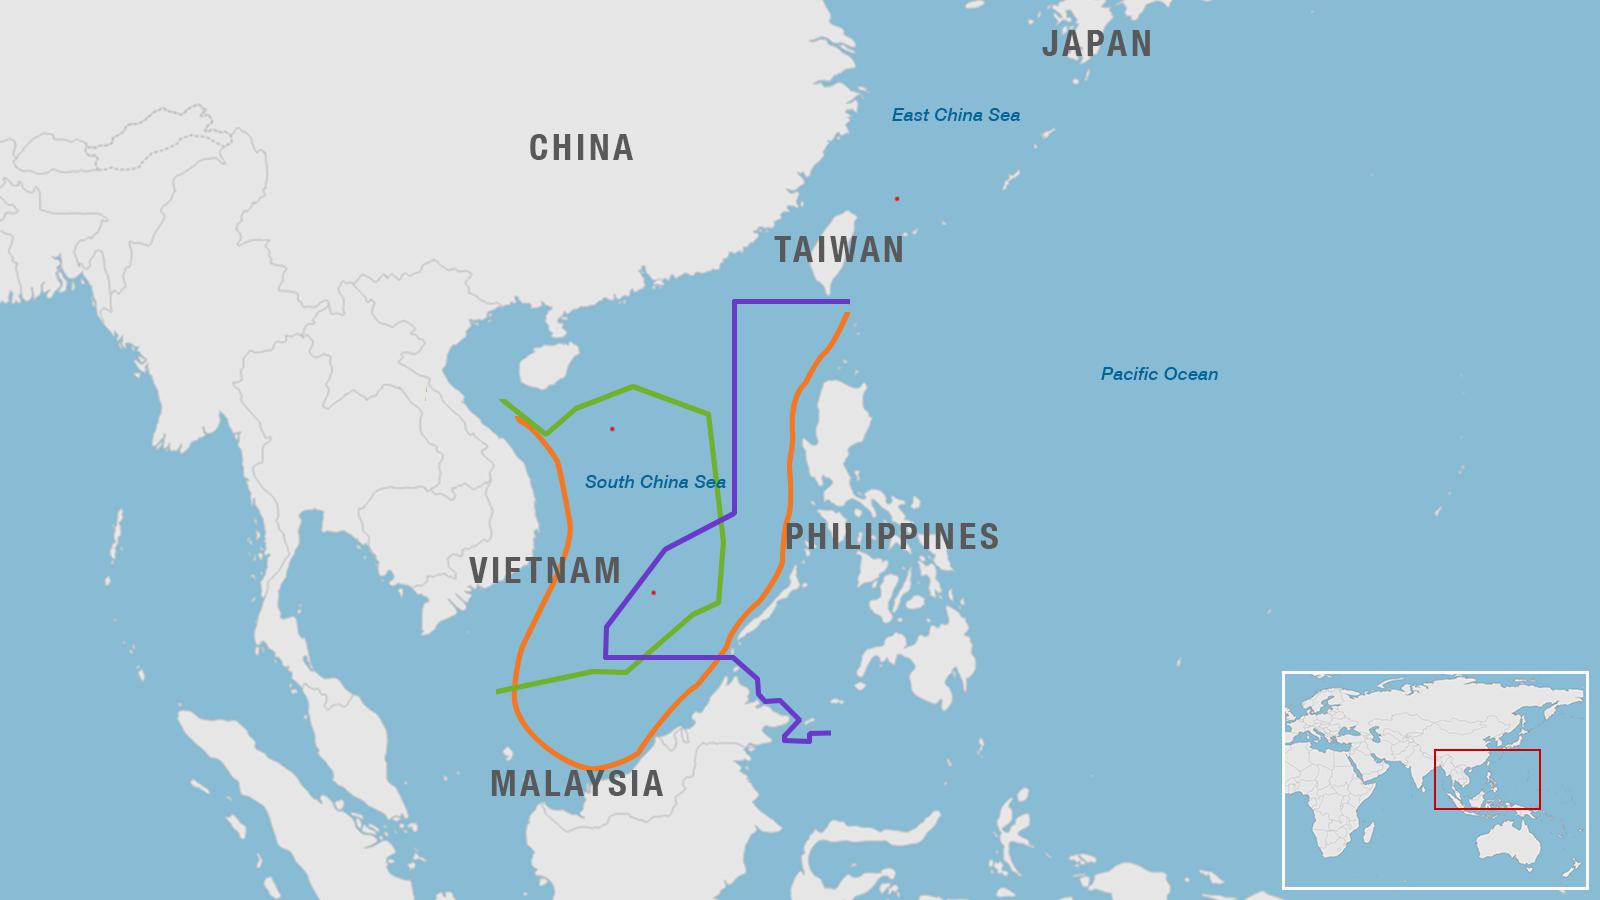 Map of South China Sea region